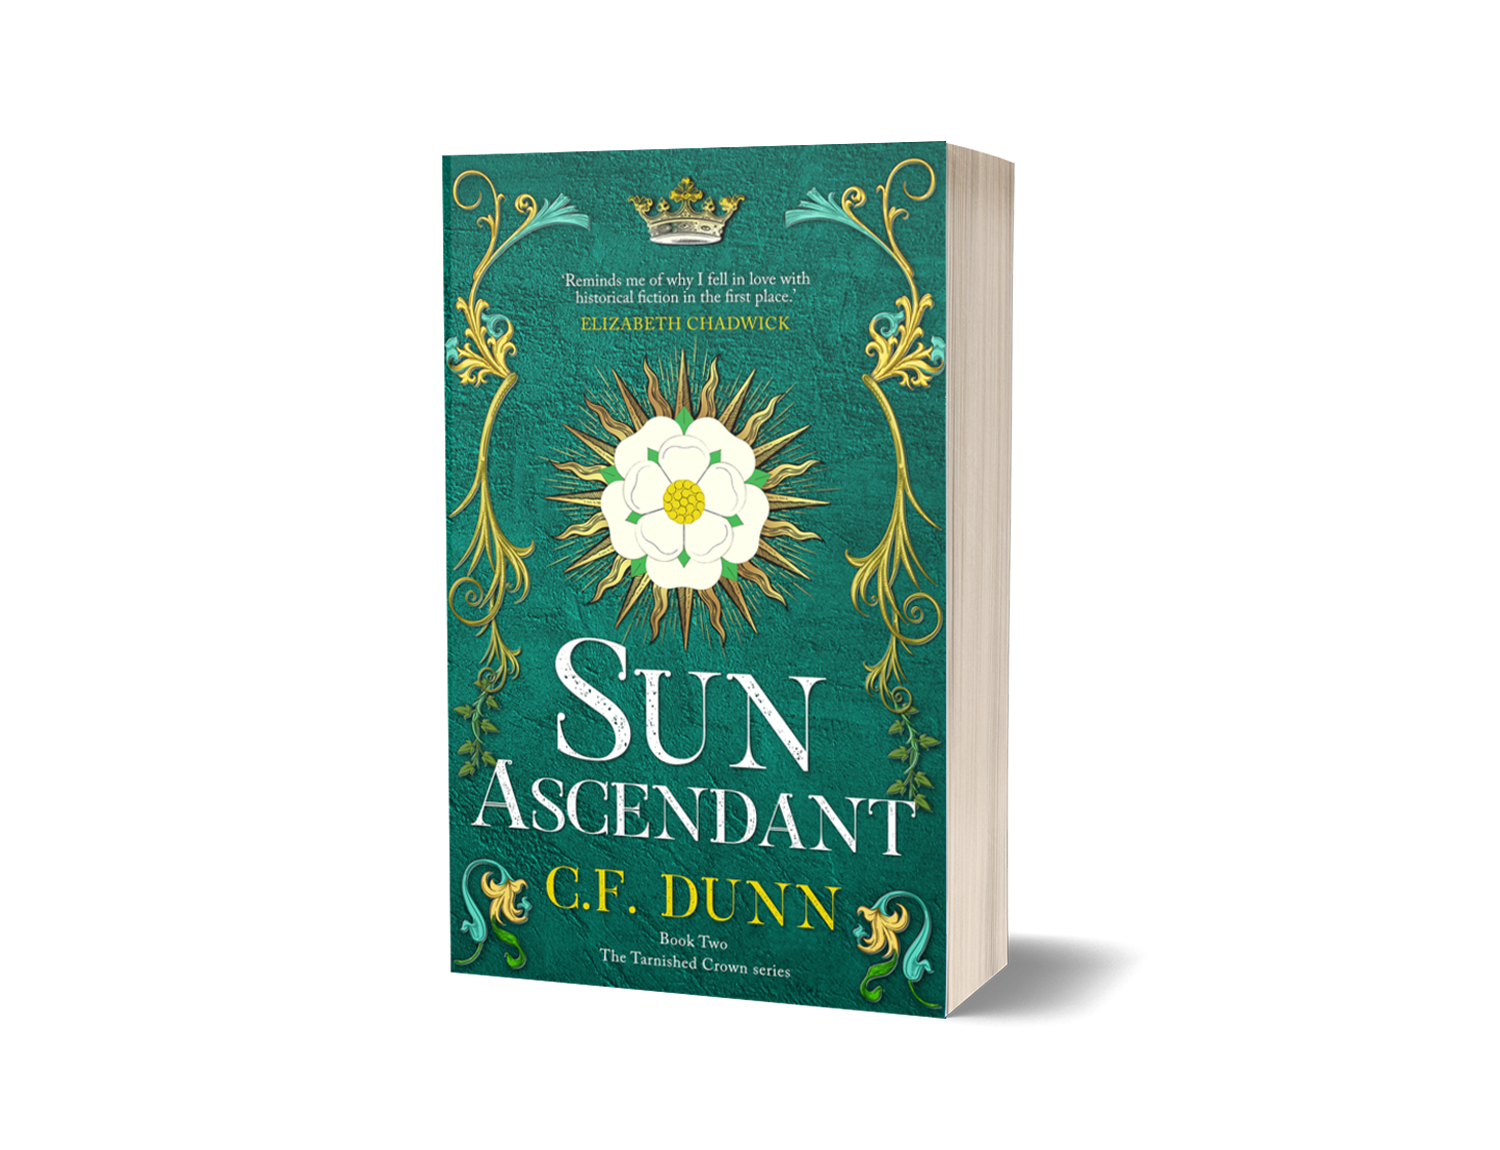 Sun Ascendant by C.F. Dunn